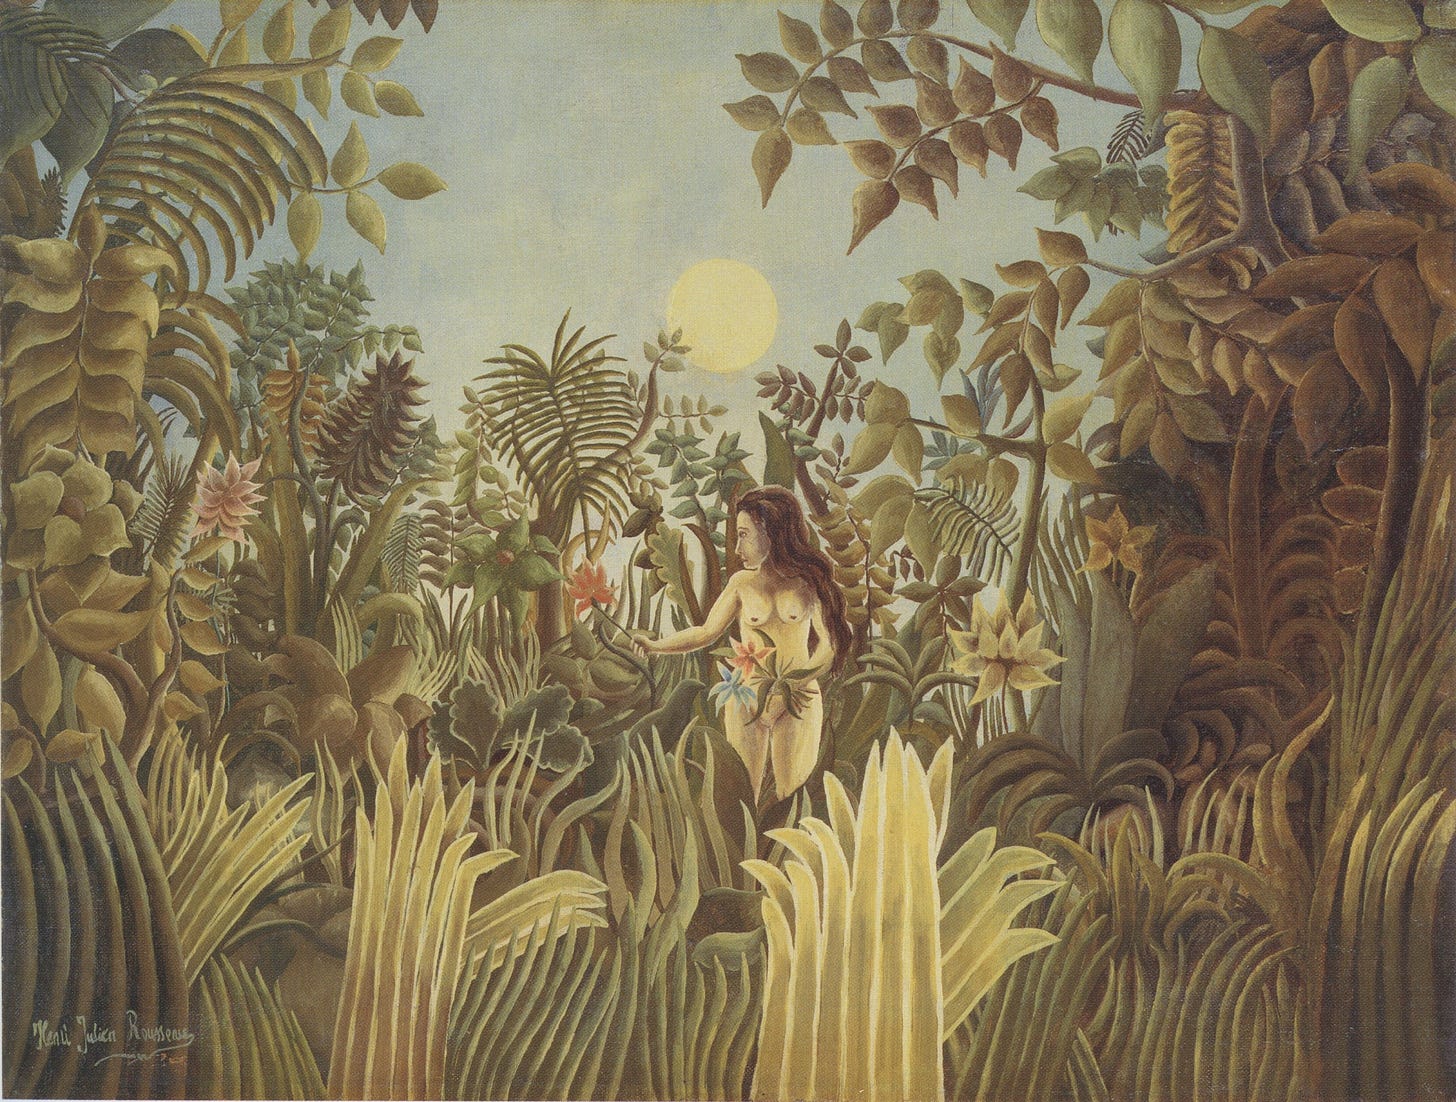 File:Henri Rousseau - Eve in the Garden of Eden.jpg - Wikimedia Commons